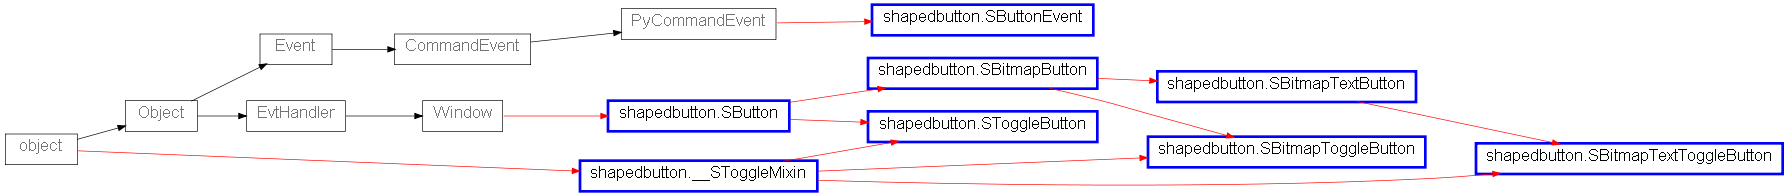 Inheritance diagram of shapedbutton